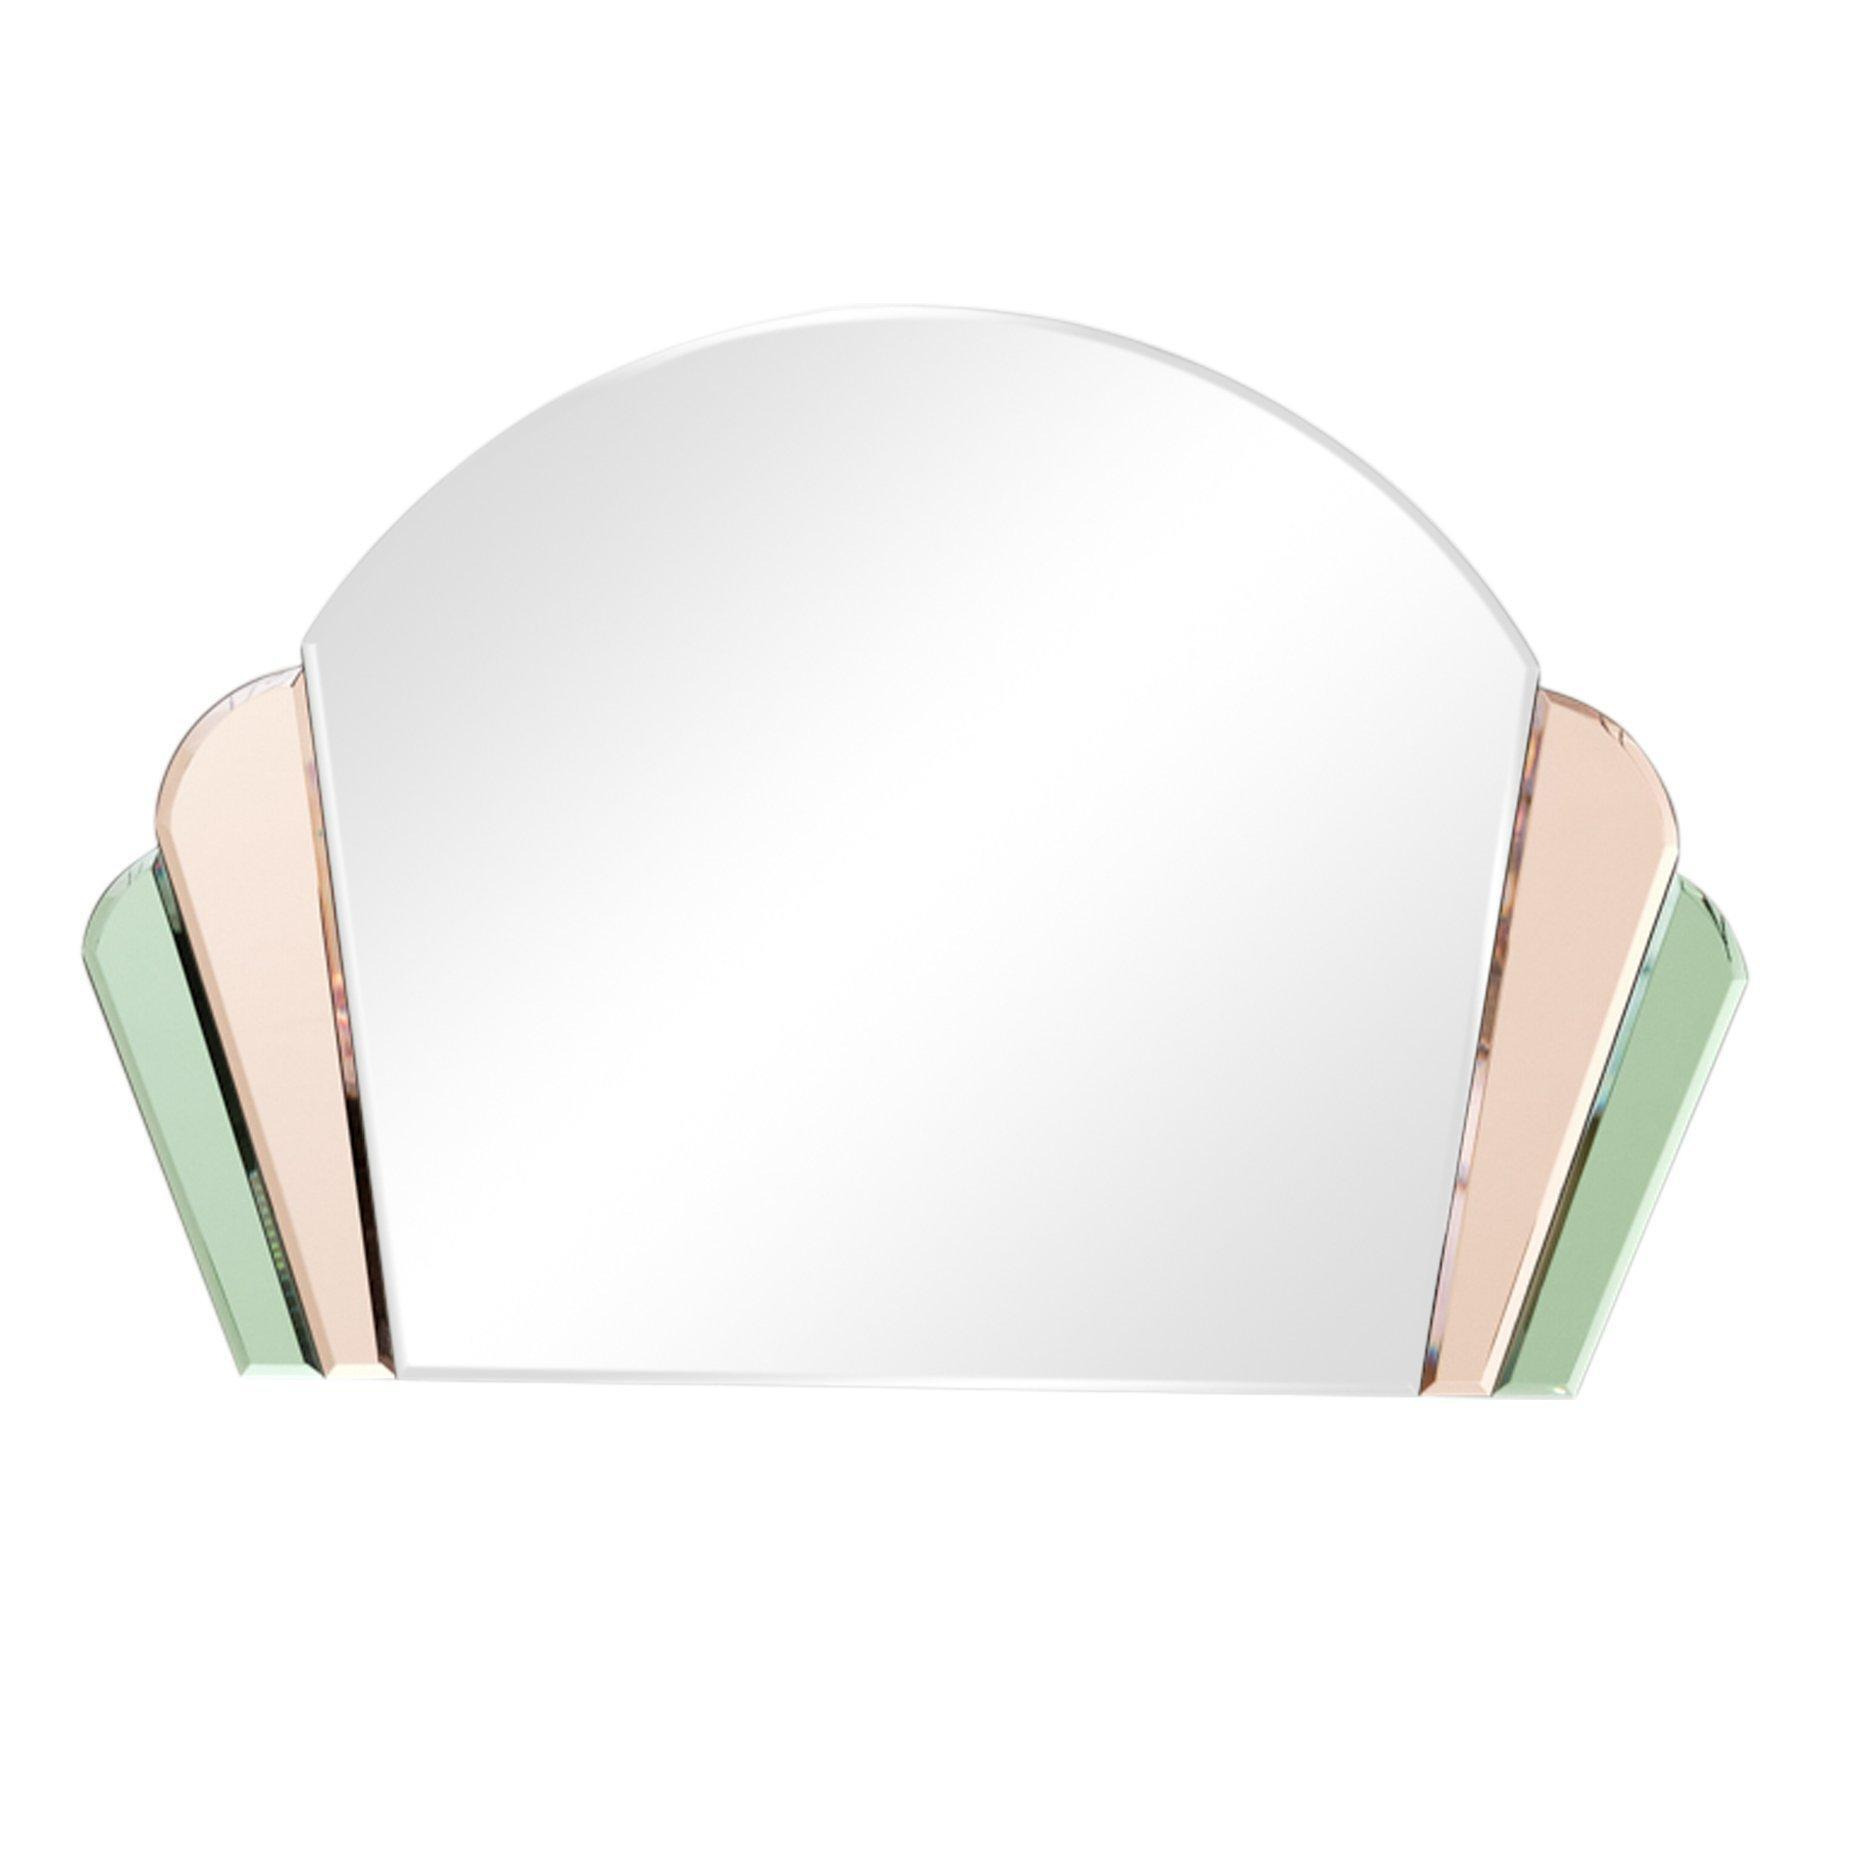 Pink & Green Glass Art Deco Arch Fan Wall Mirror 71cm X 46cm - image 1